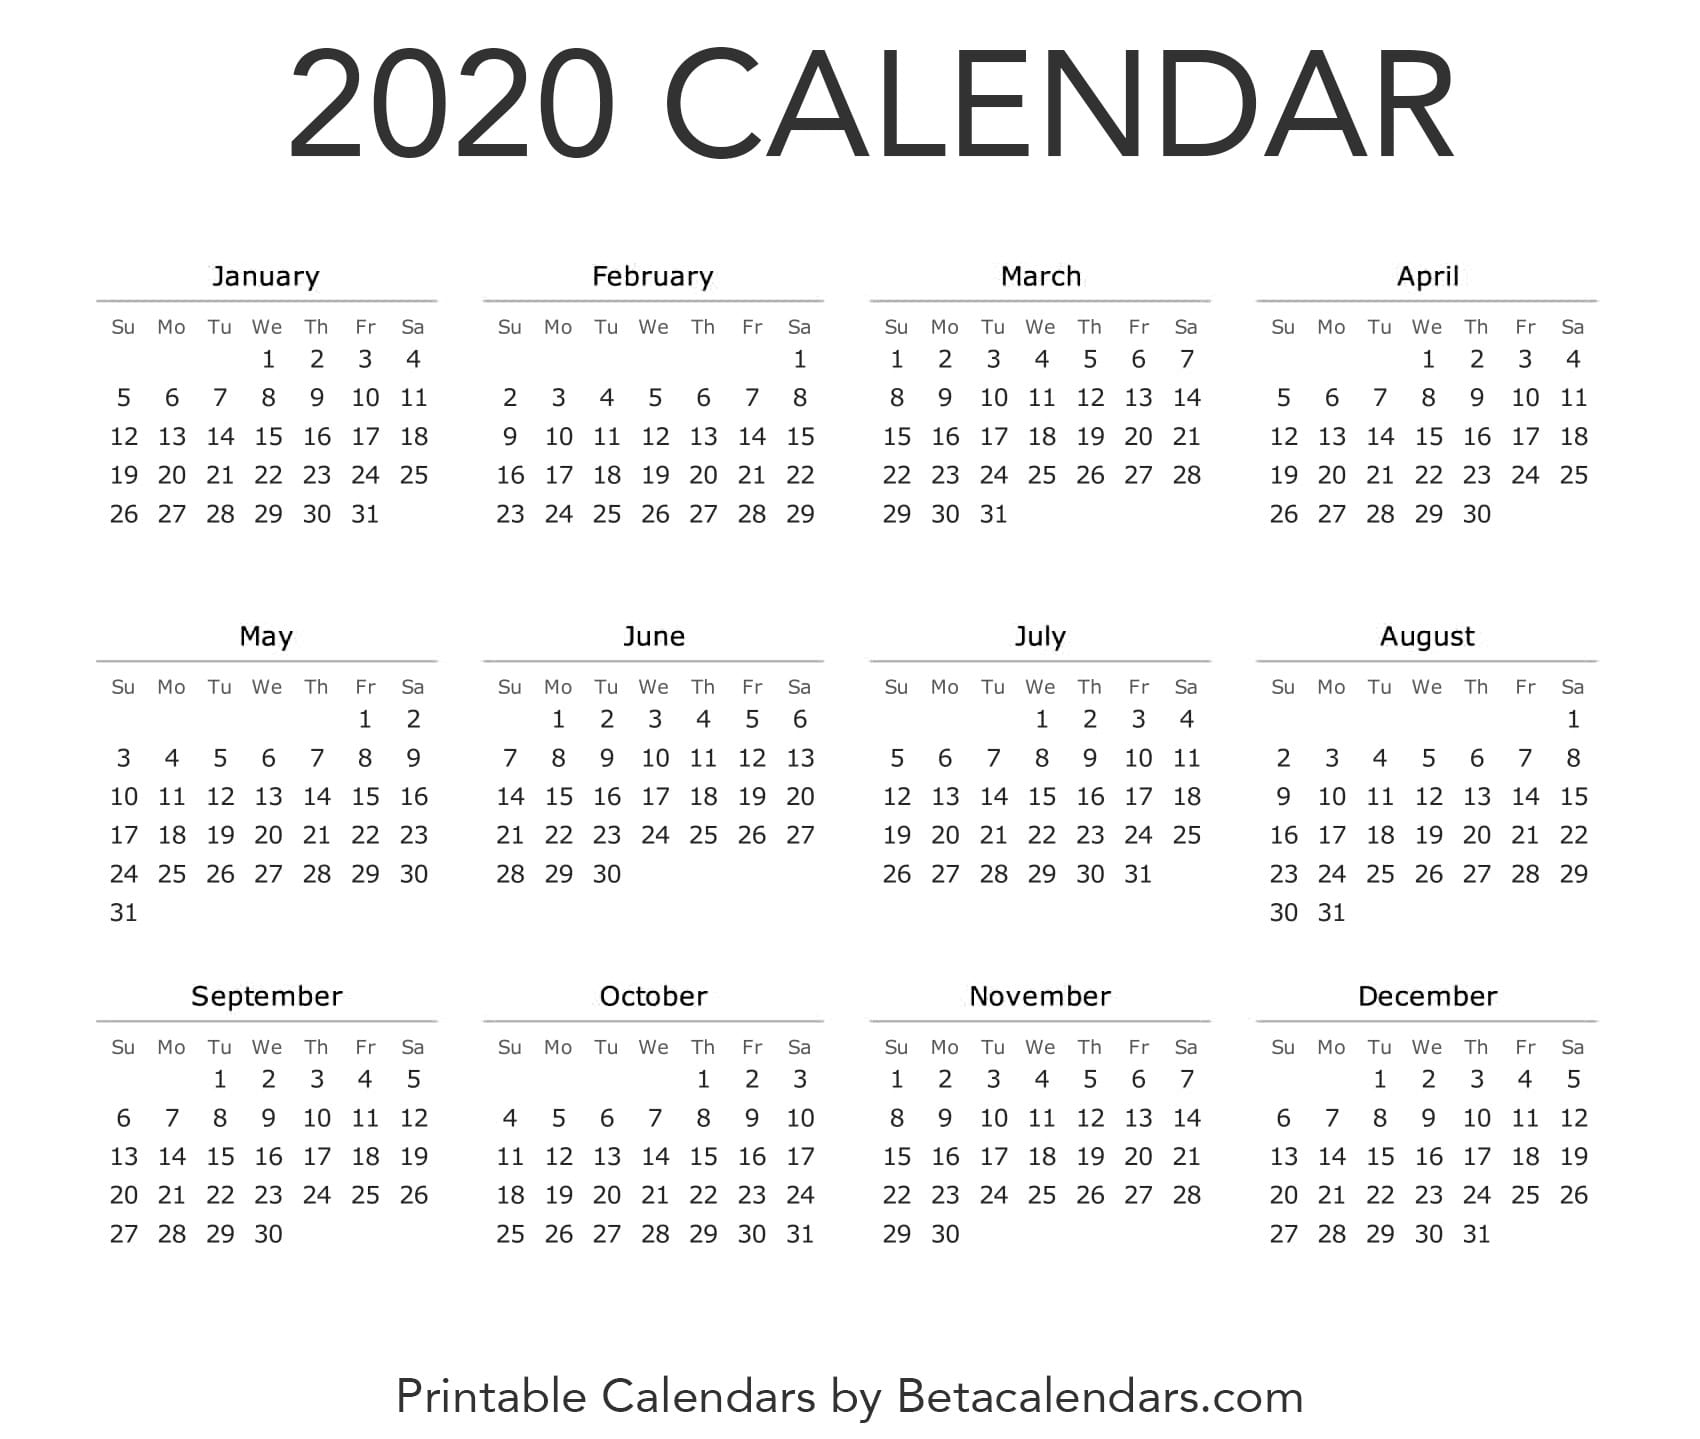 2020 Calendar - Beta Calendars